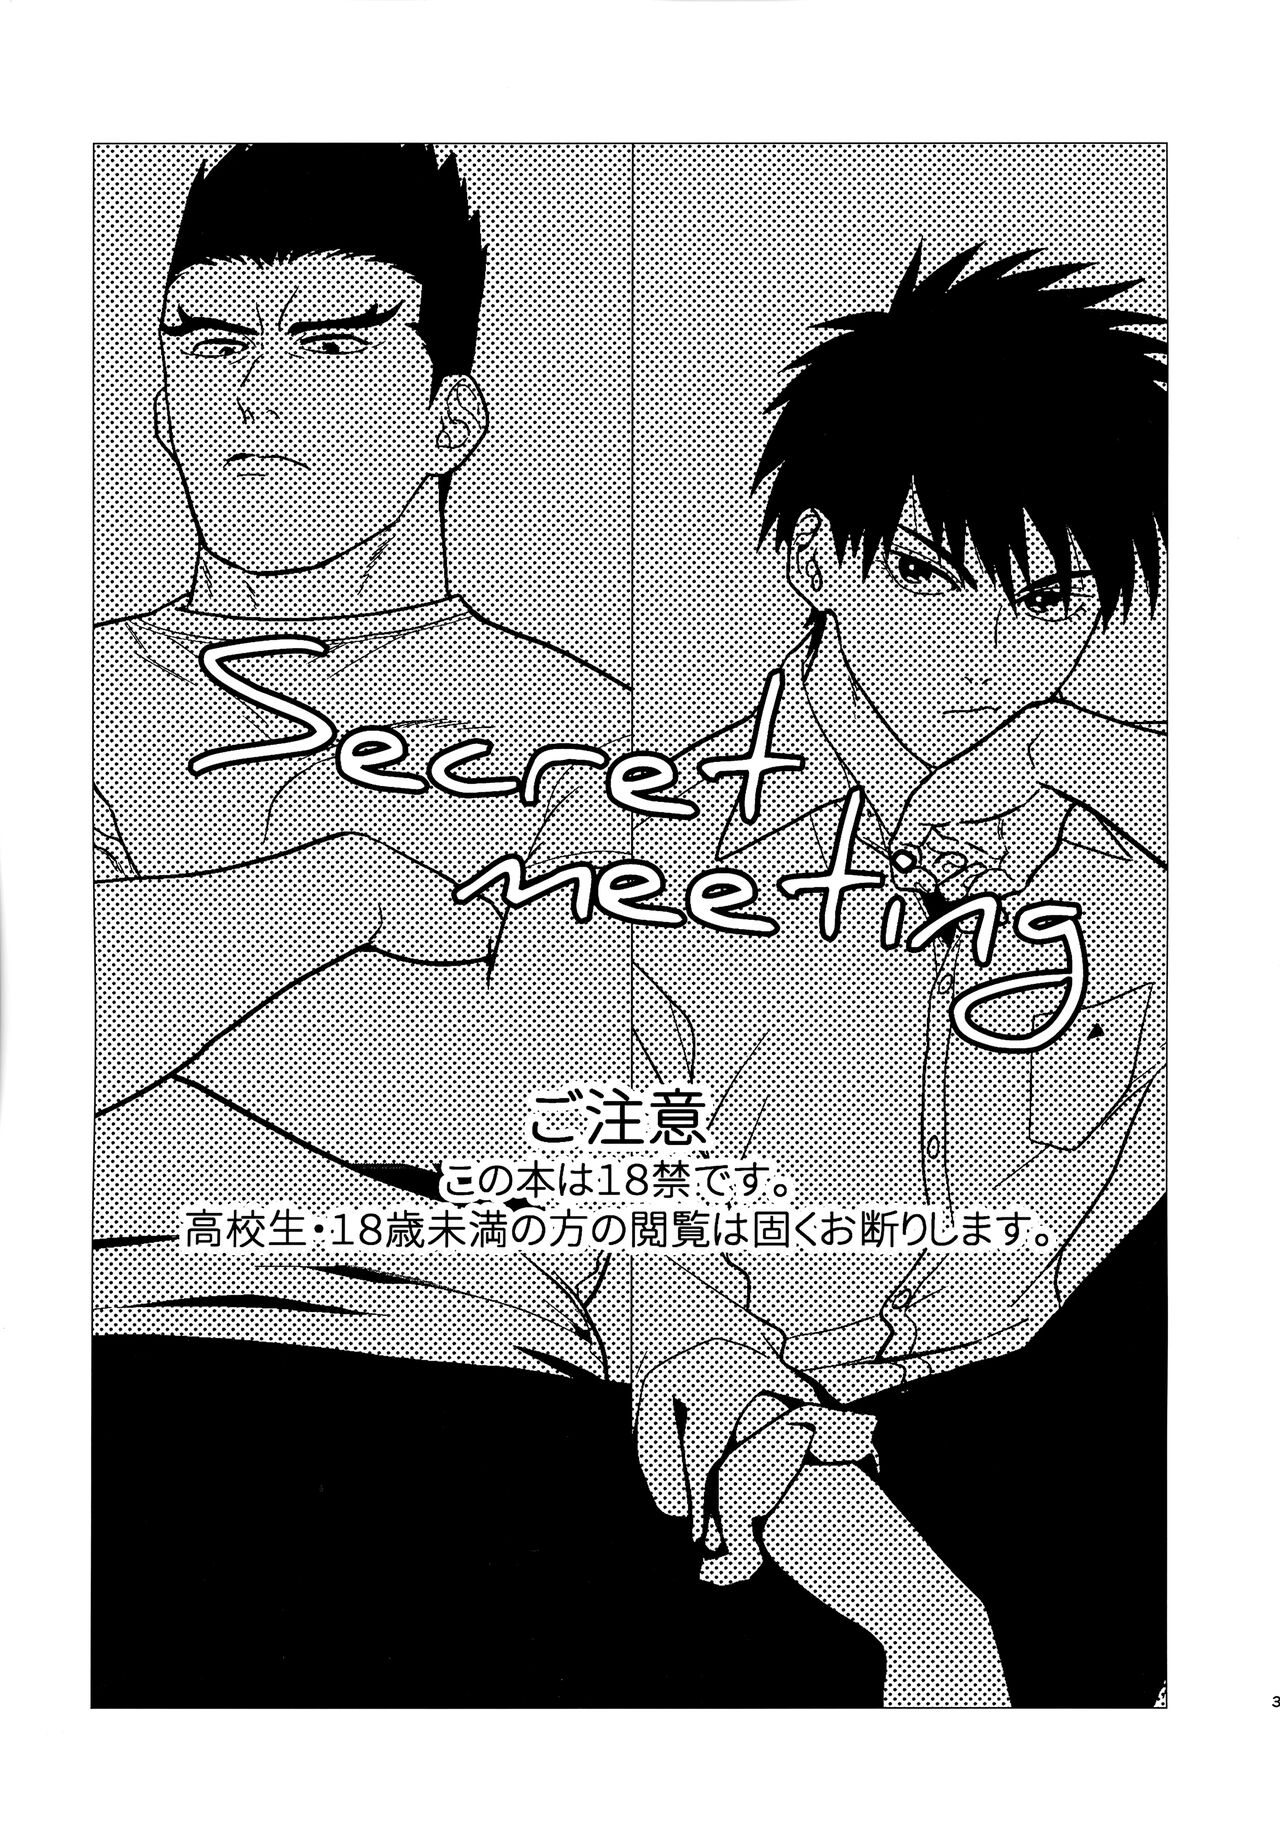 Secret meeting - Foto 2